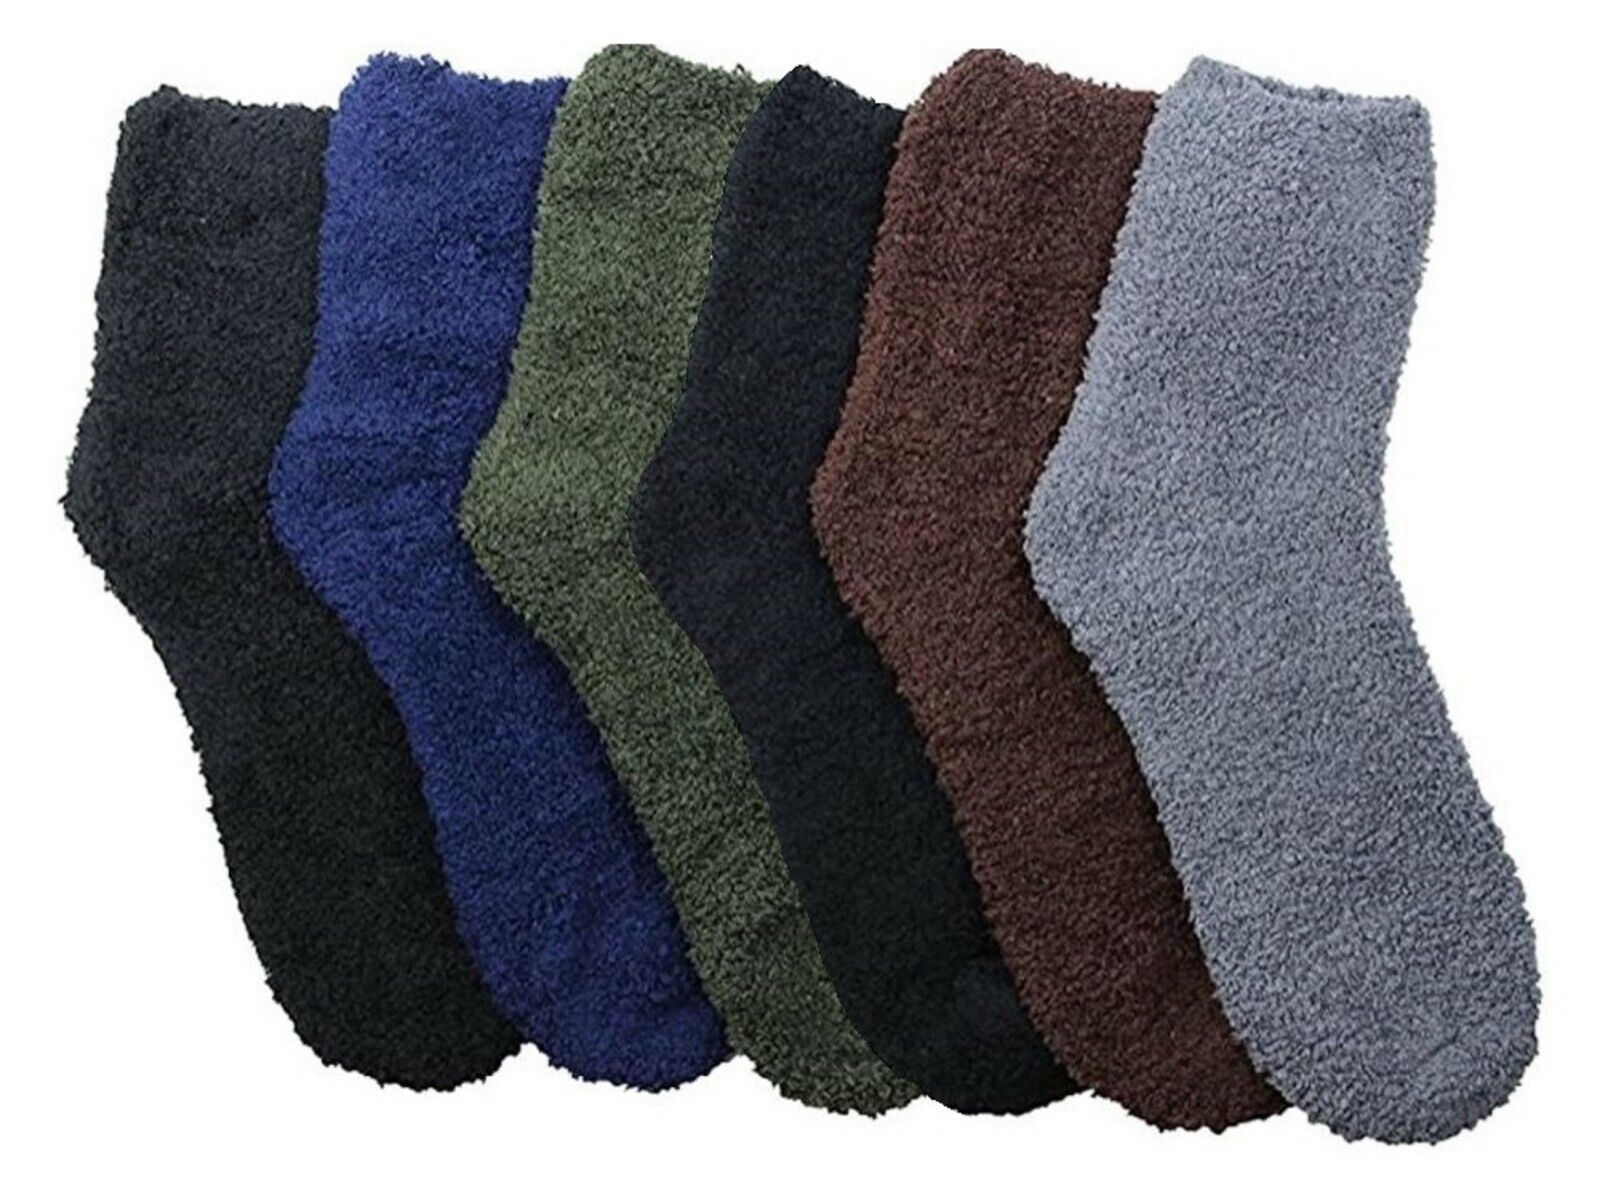 6 Pairs Fuzzy Warm Soft Hospital Crew Plain Cozy Socks Slipper 301PL3 Size 9-11 Unbranded